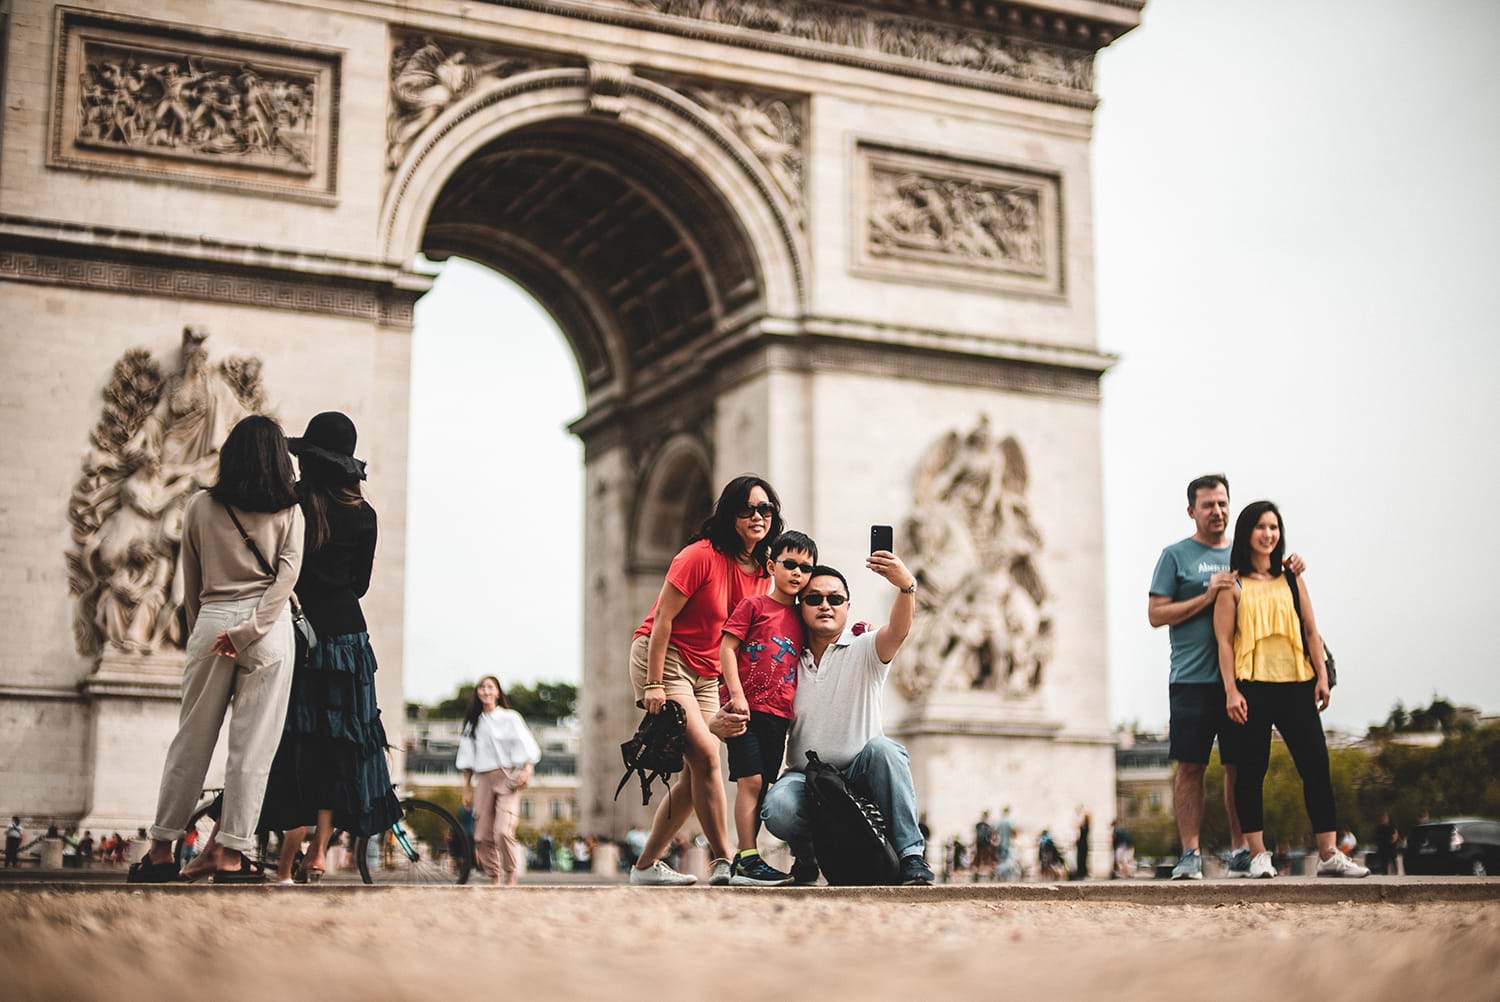 Tourists taking photos at the Arc de Triomphe in Paris